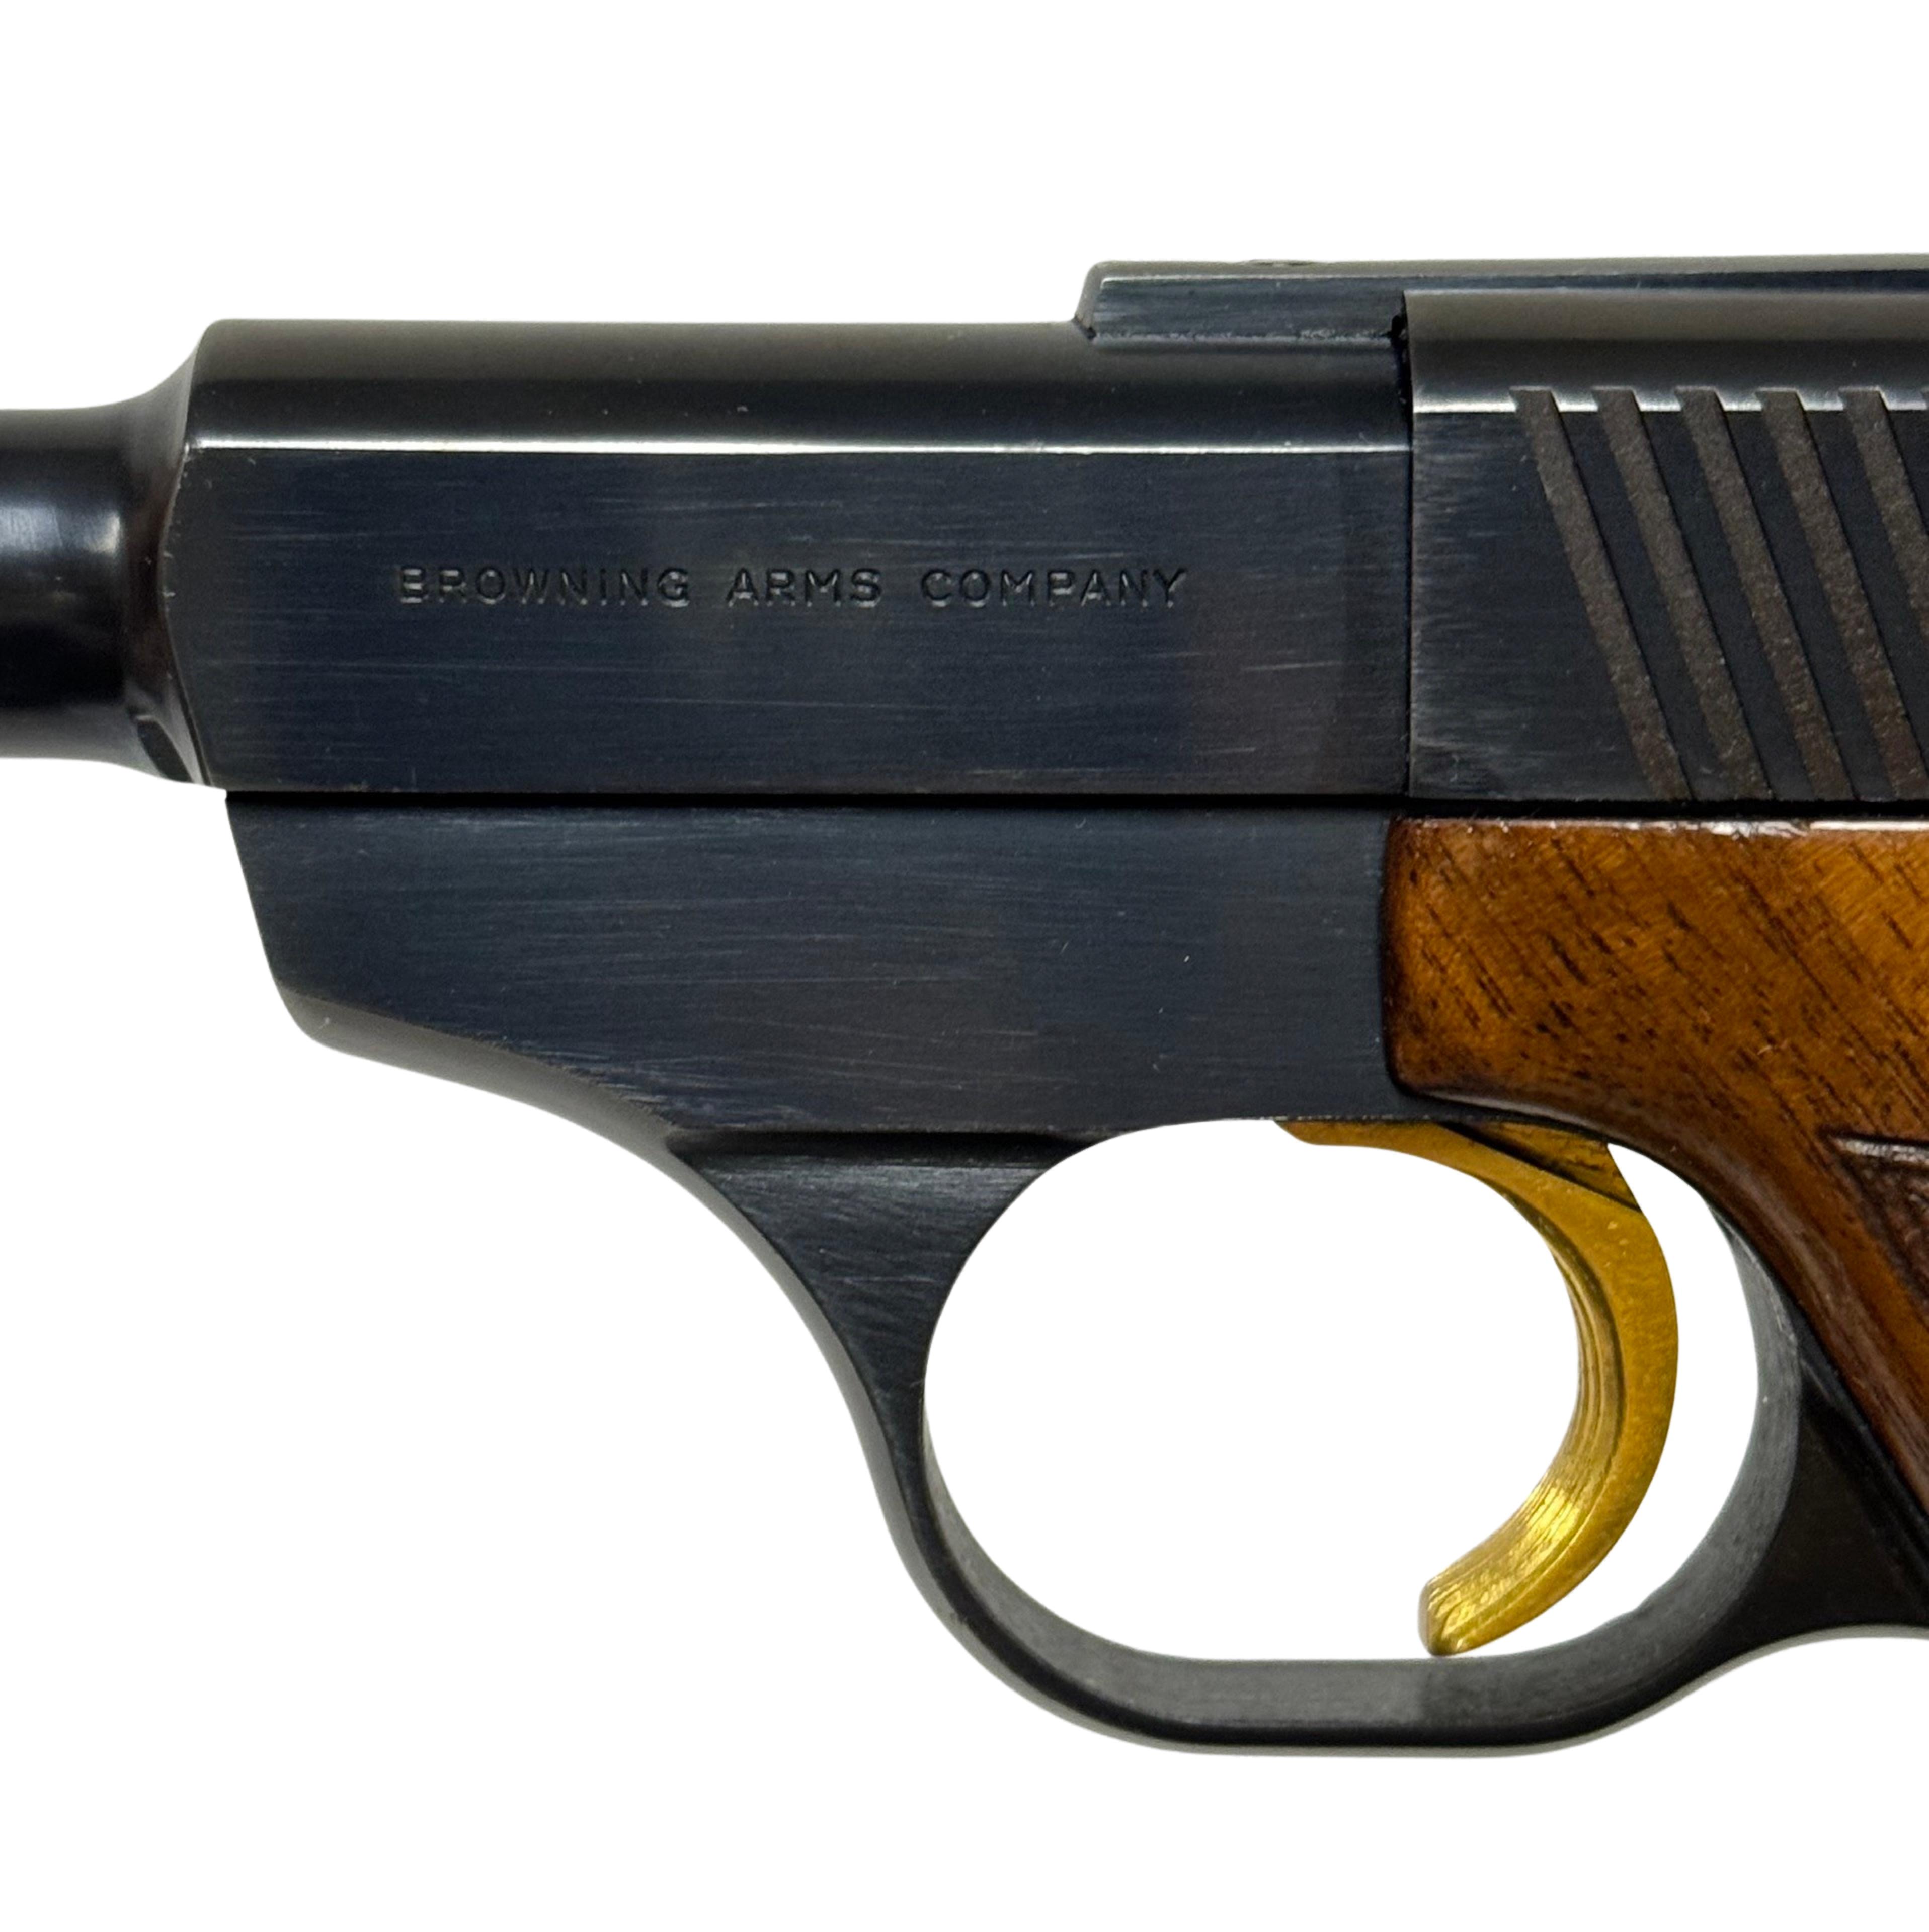 Excellent 1968 Belgium Browning Challenger .22 LR Semi-Automatic Pistol